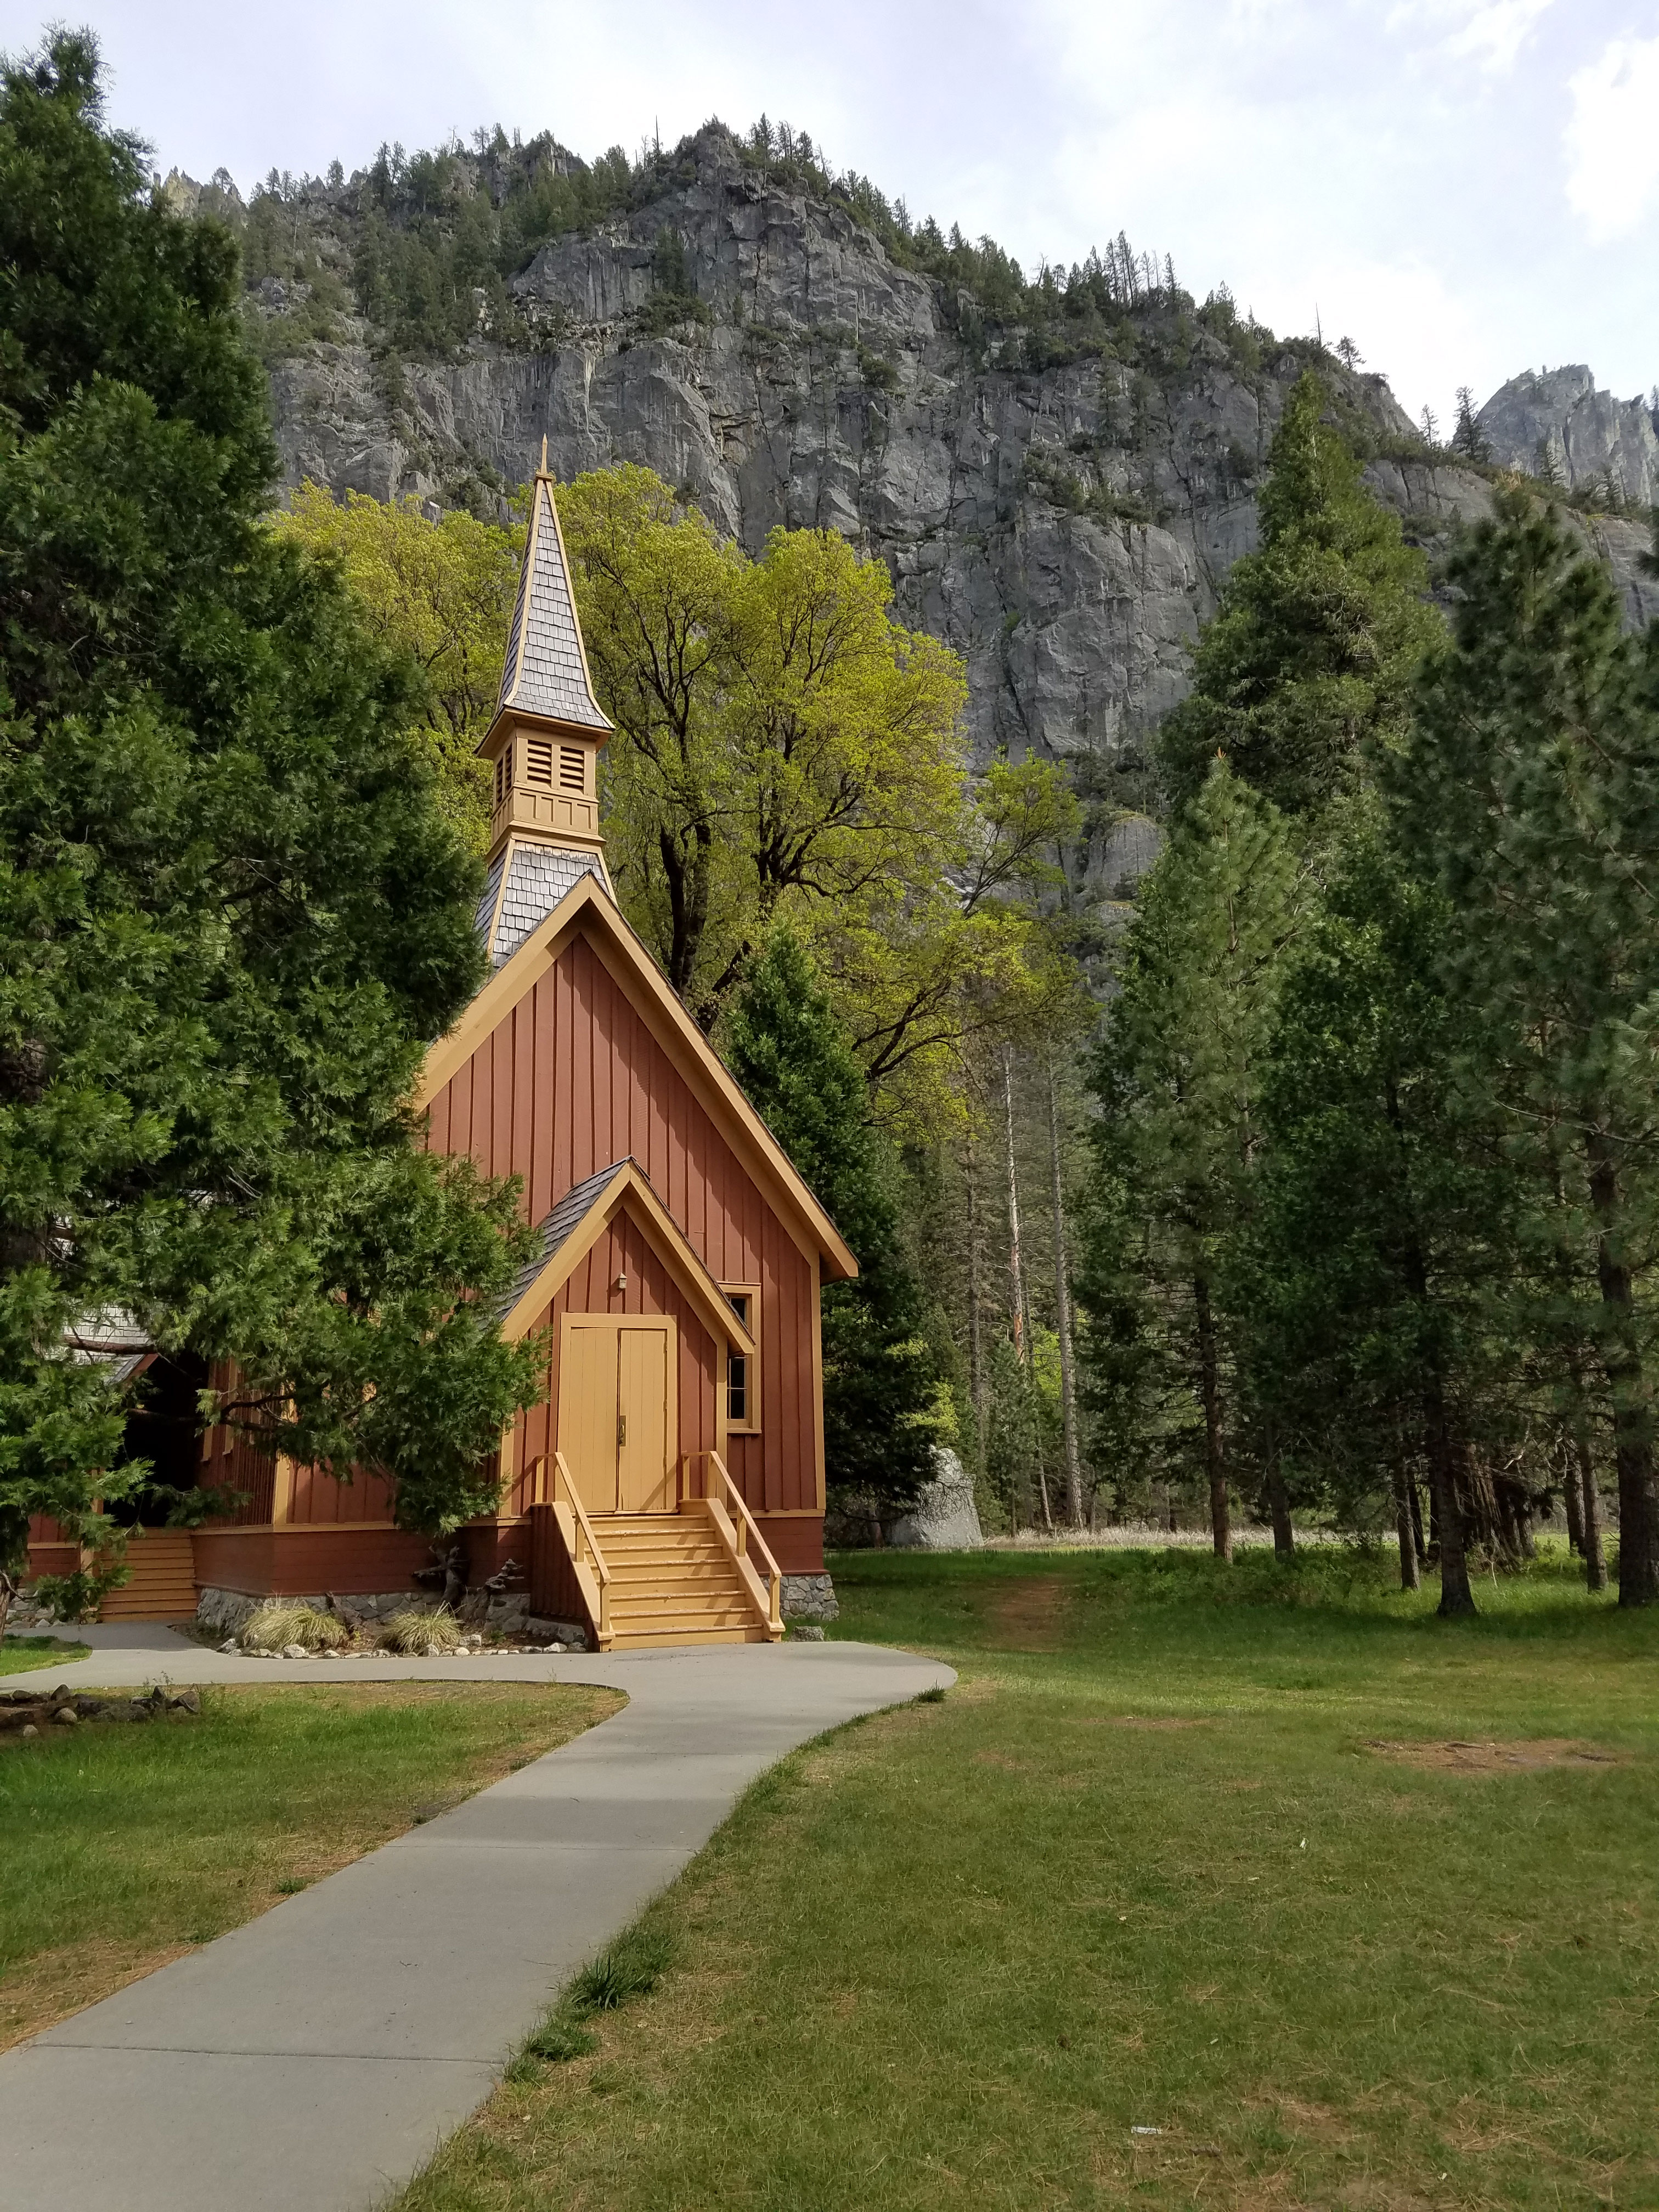 Yosemite church